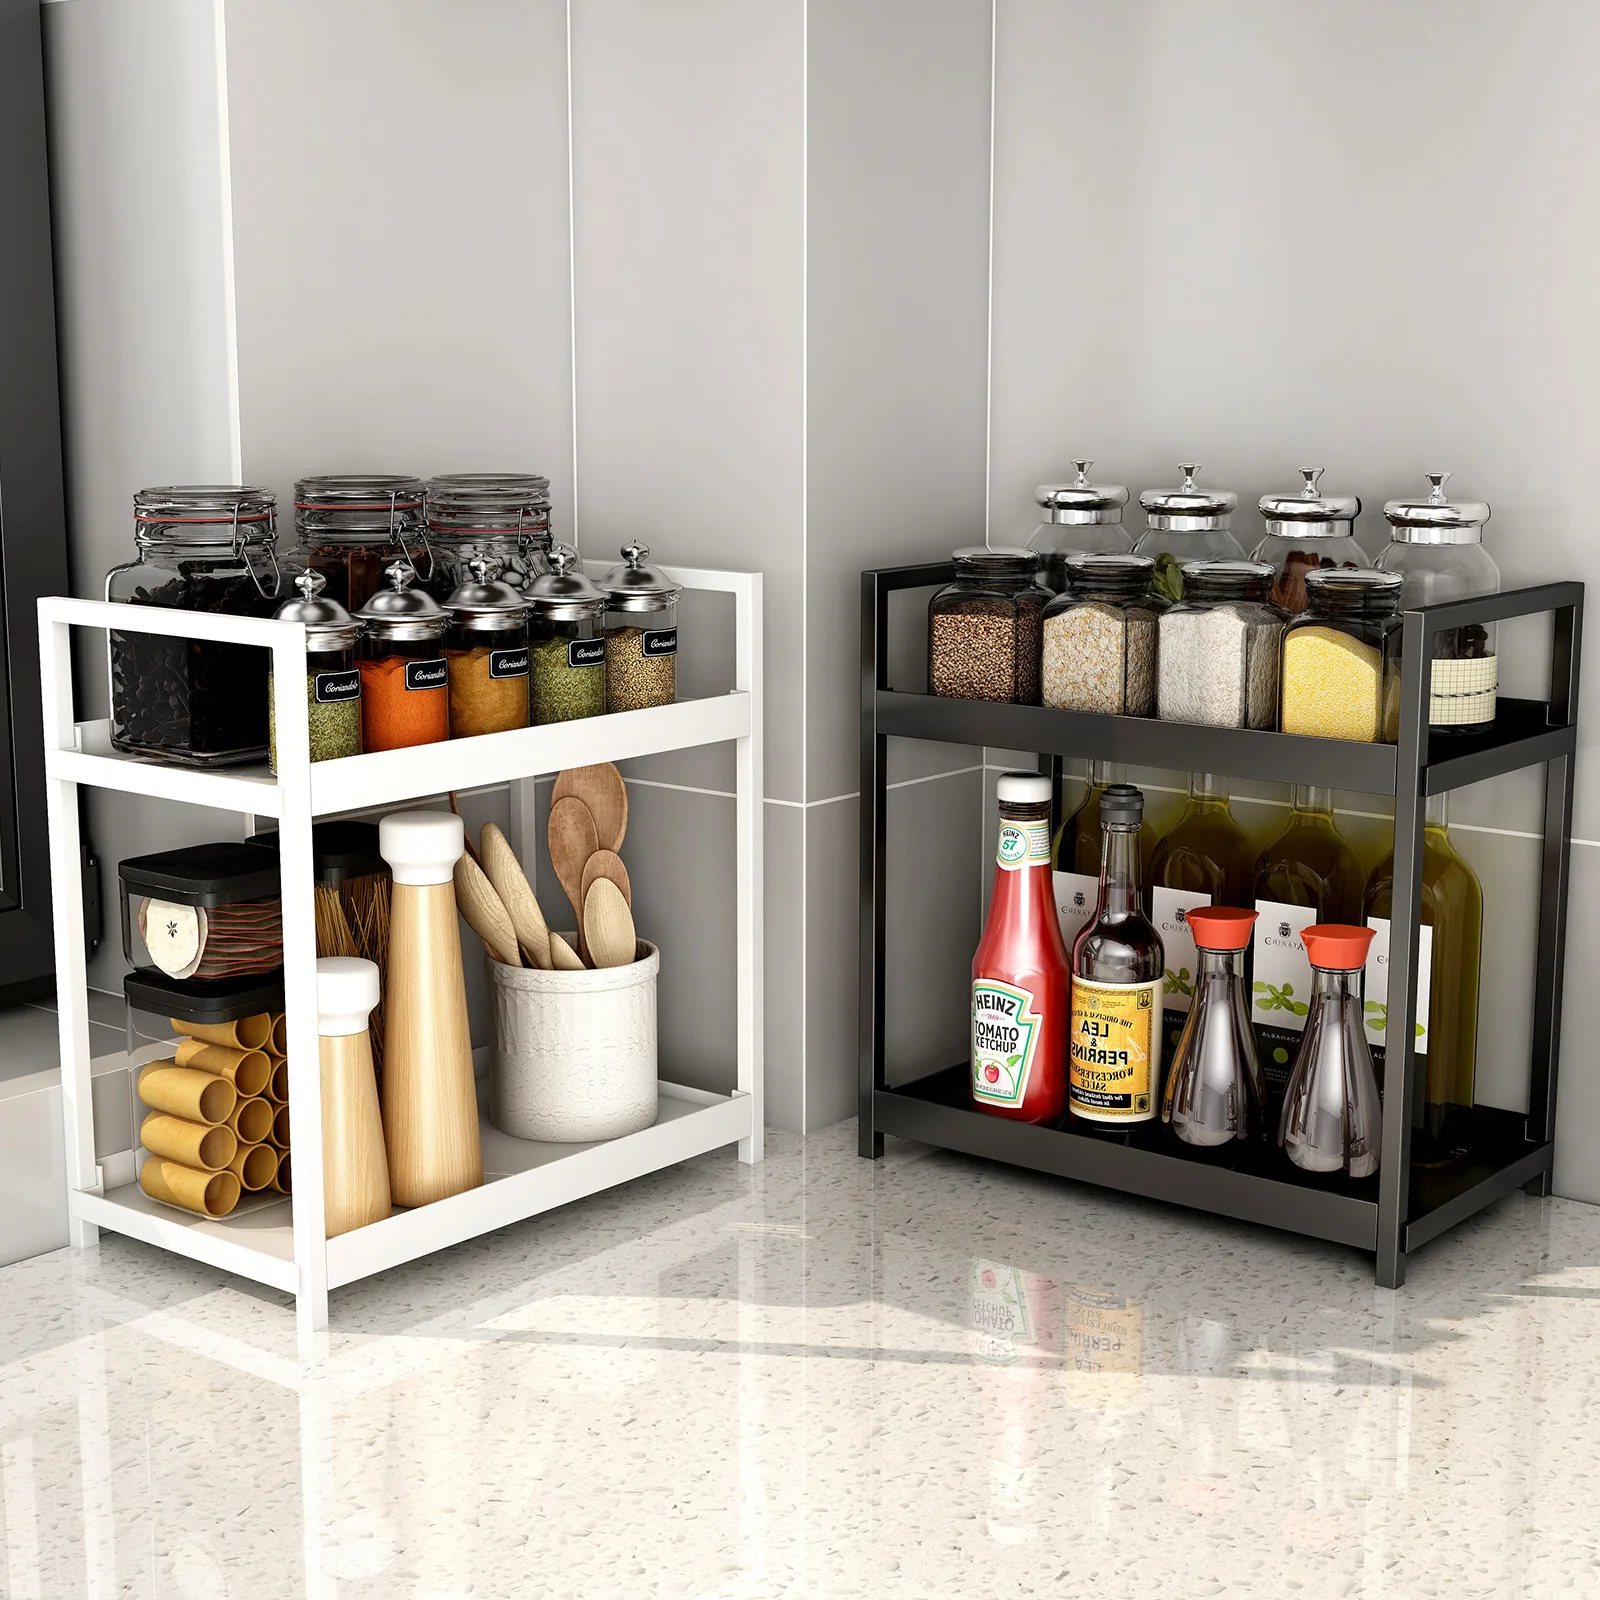 

2 Tier Metal Spice Rack,Countertop Storage Holder for Seasoning Boxes,Bottles,Kitchen Items Accessories Tools Organizer Shelf